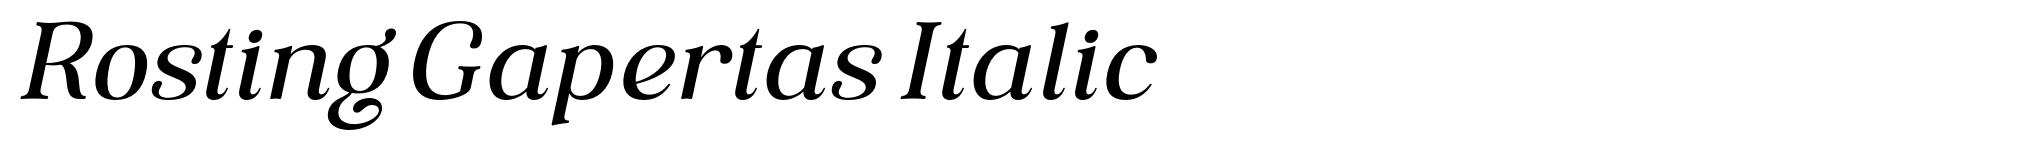 Rosting Gapertas Italic image